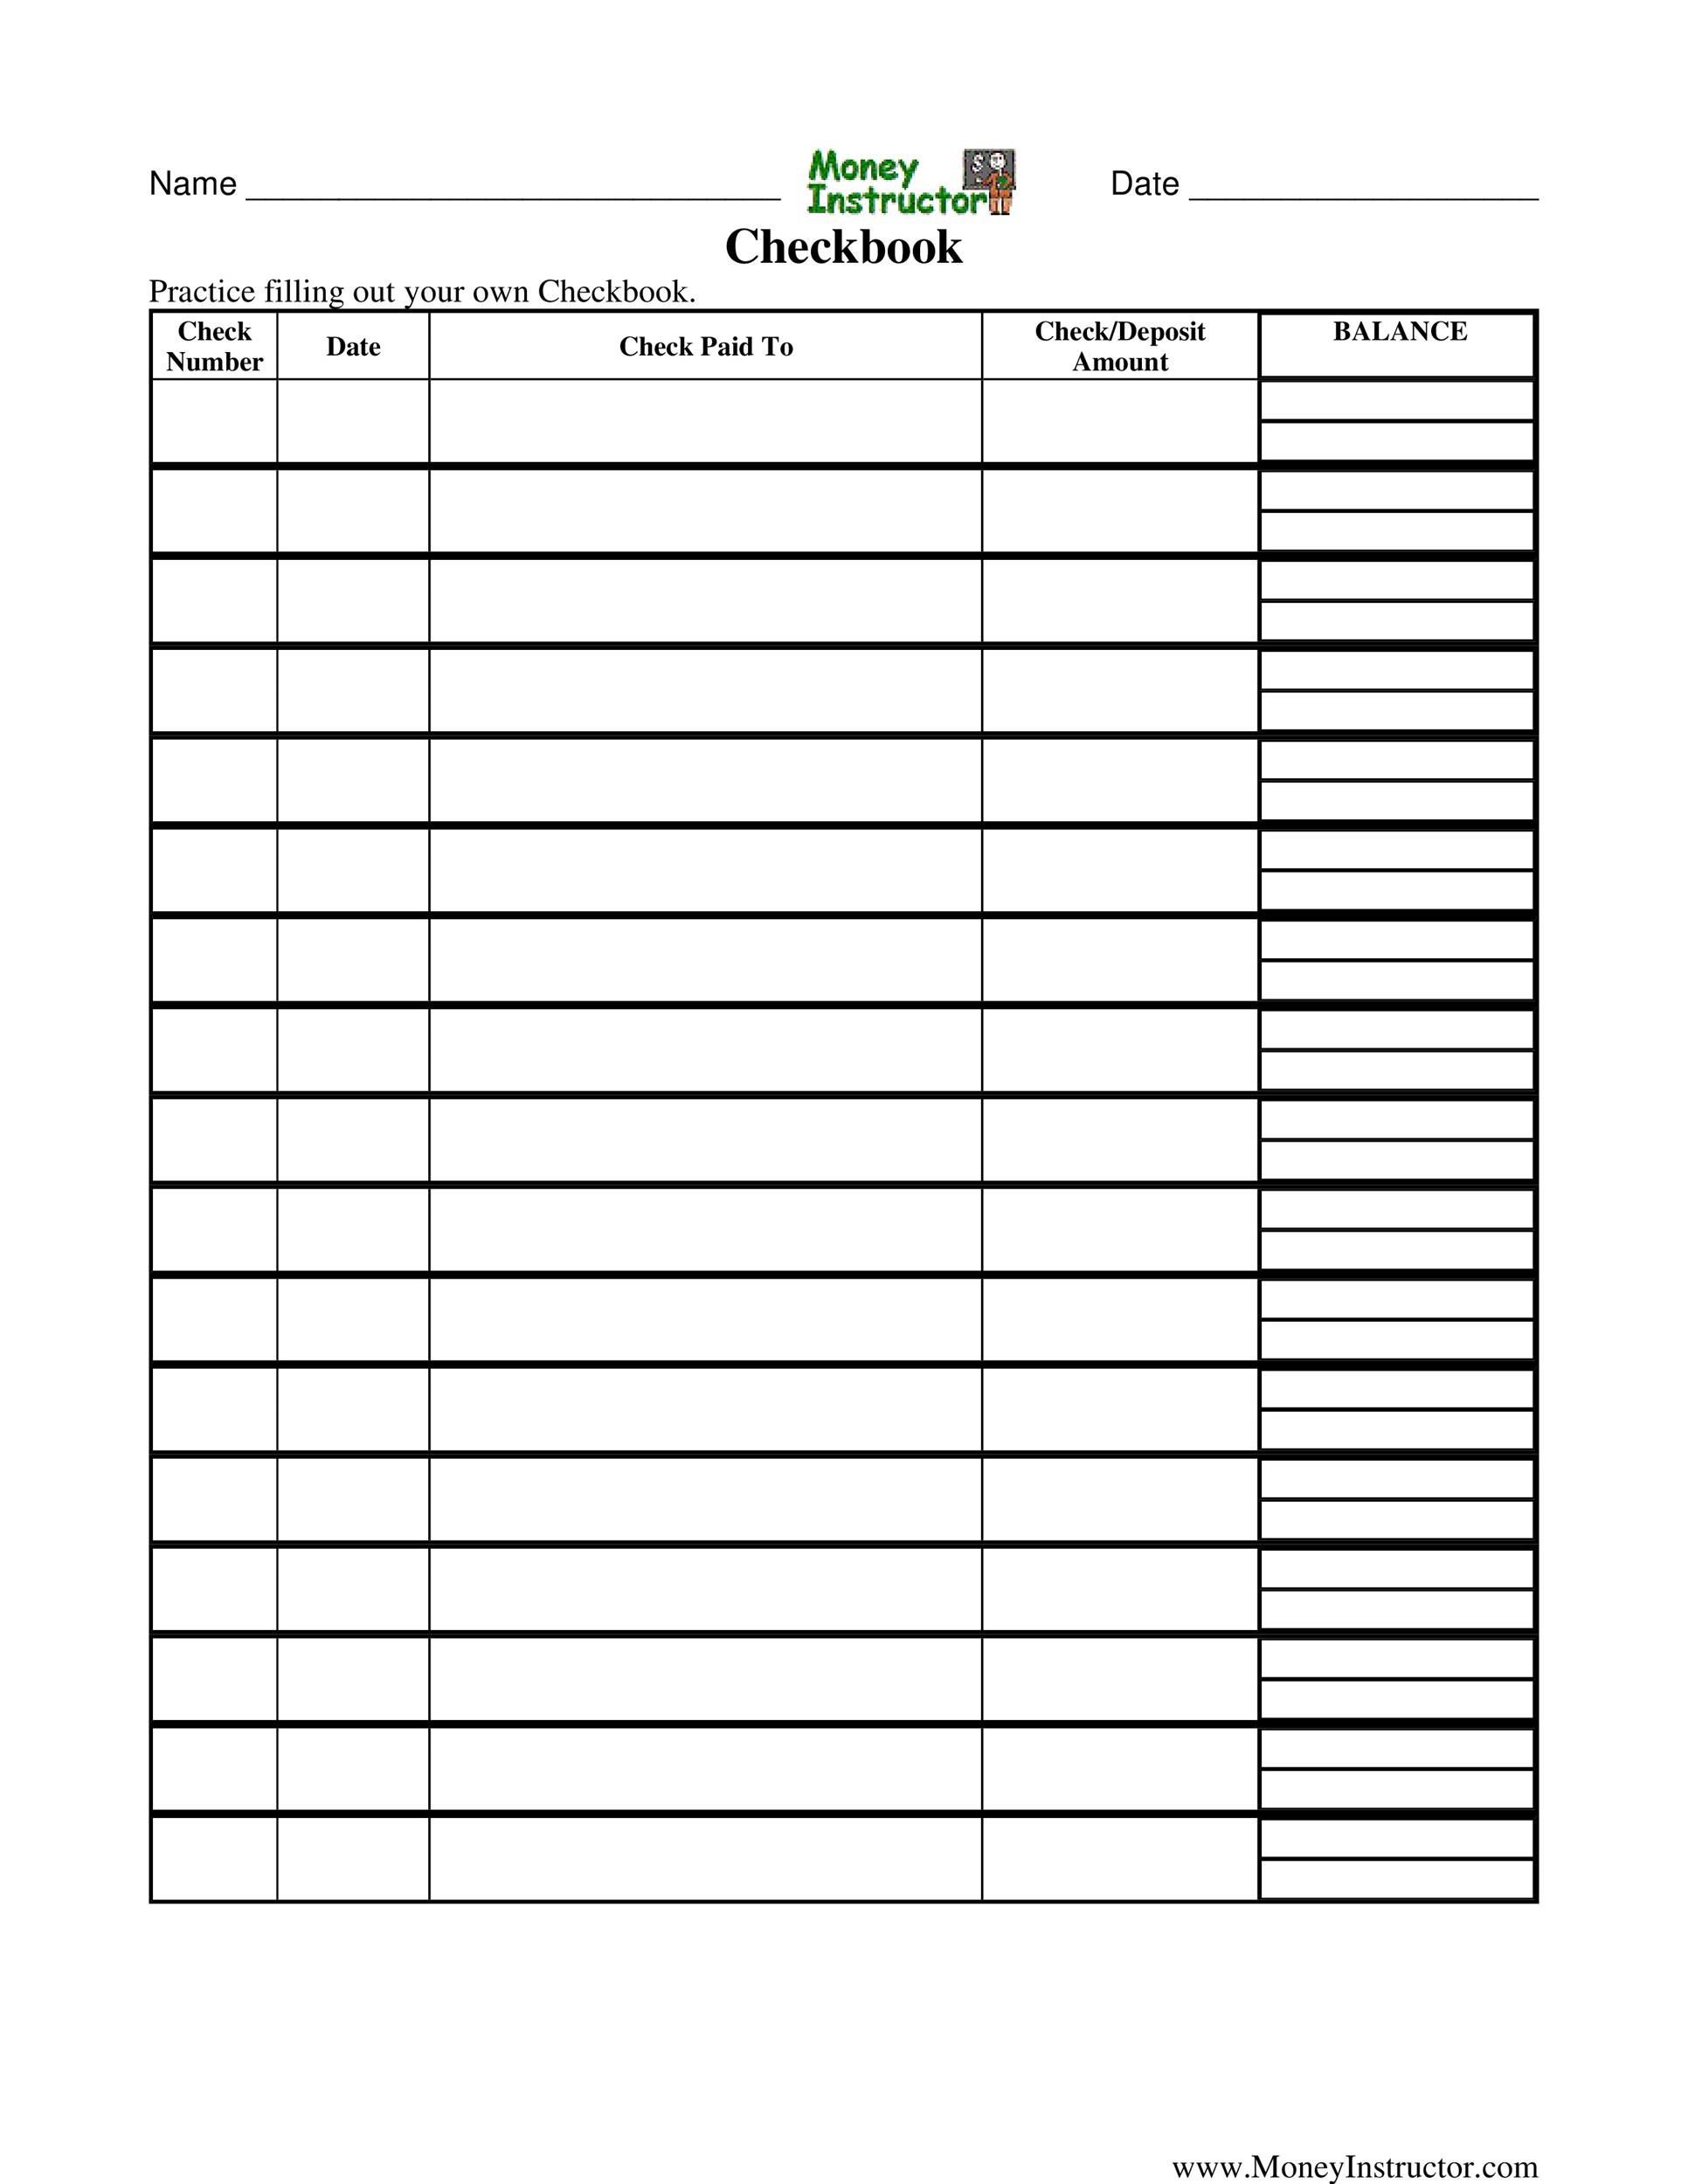 39-checkbook-register-templates-100-free-printable-templatelab